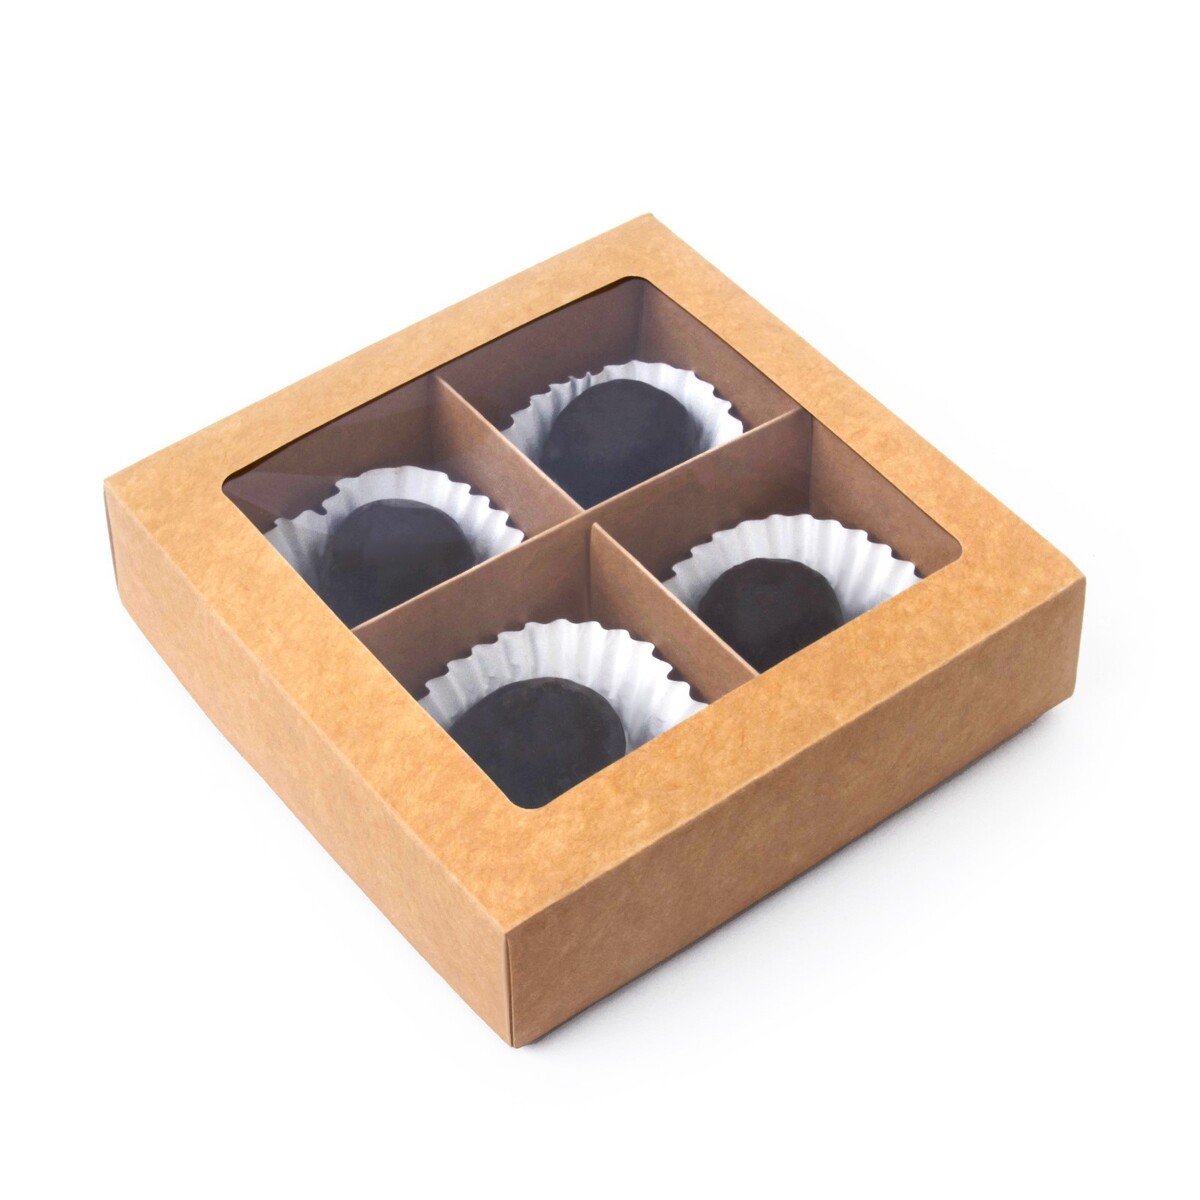 Коробка складная под 4 конфеты с окном, крафт, 12.6 х 12.6 х 3.5 см коробка складная под 9 конфет крафт 13 8 х 13 8 х 3 8 см